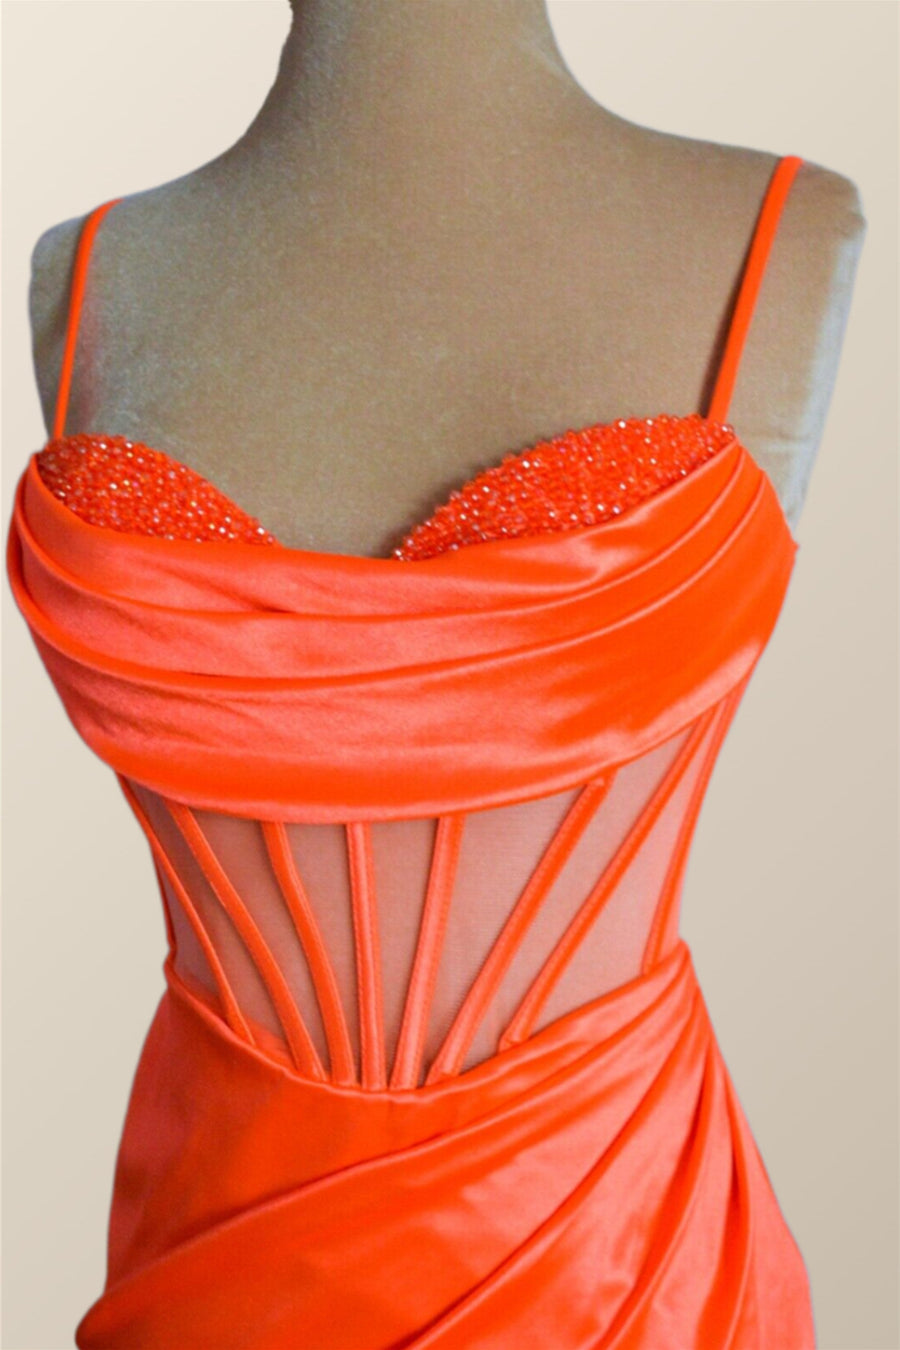 Orange Spaghetti Straps Mermaid Long Formal Dress